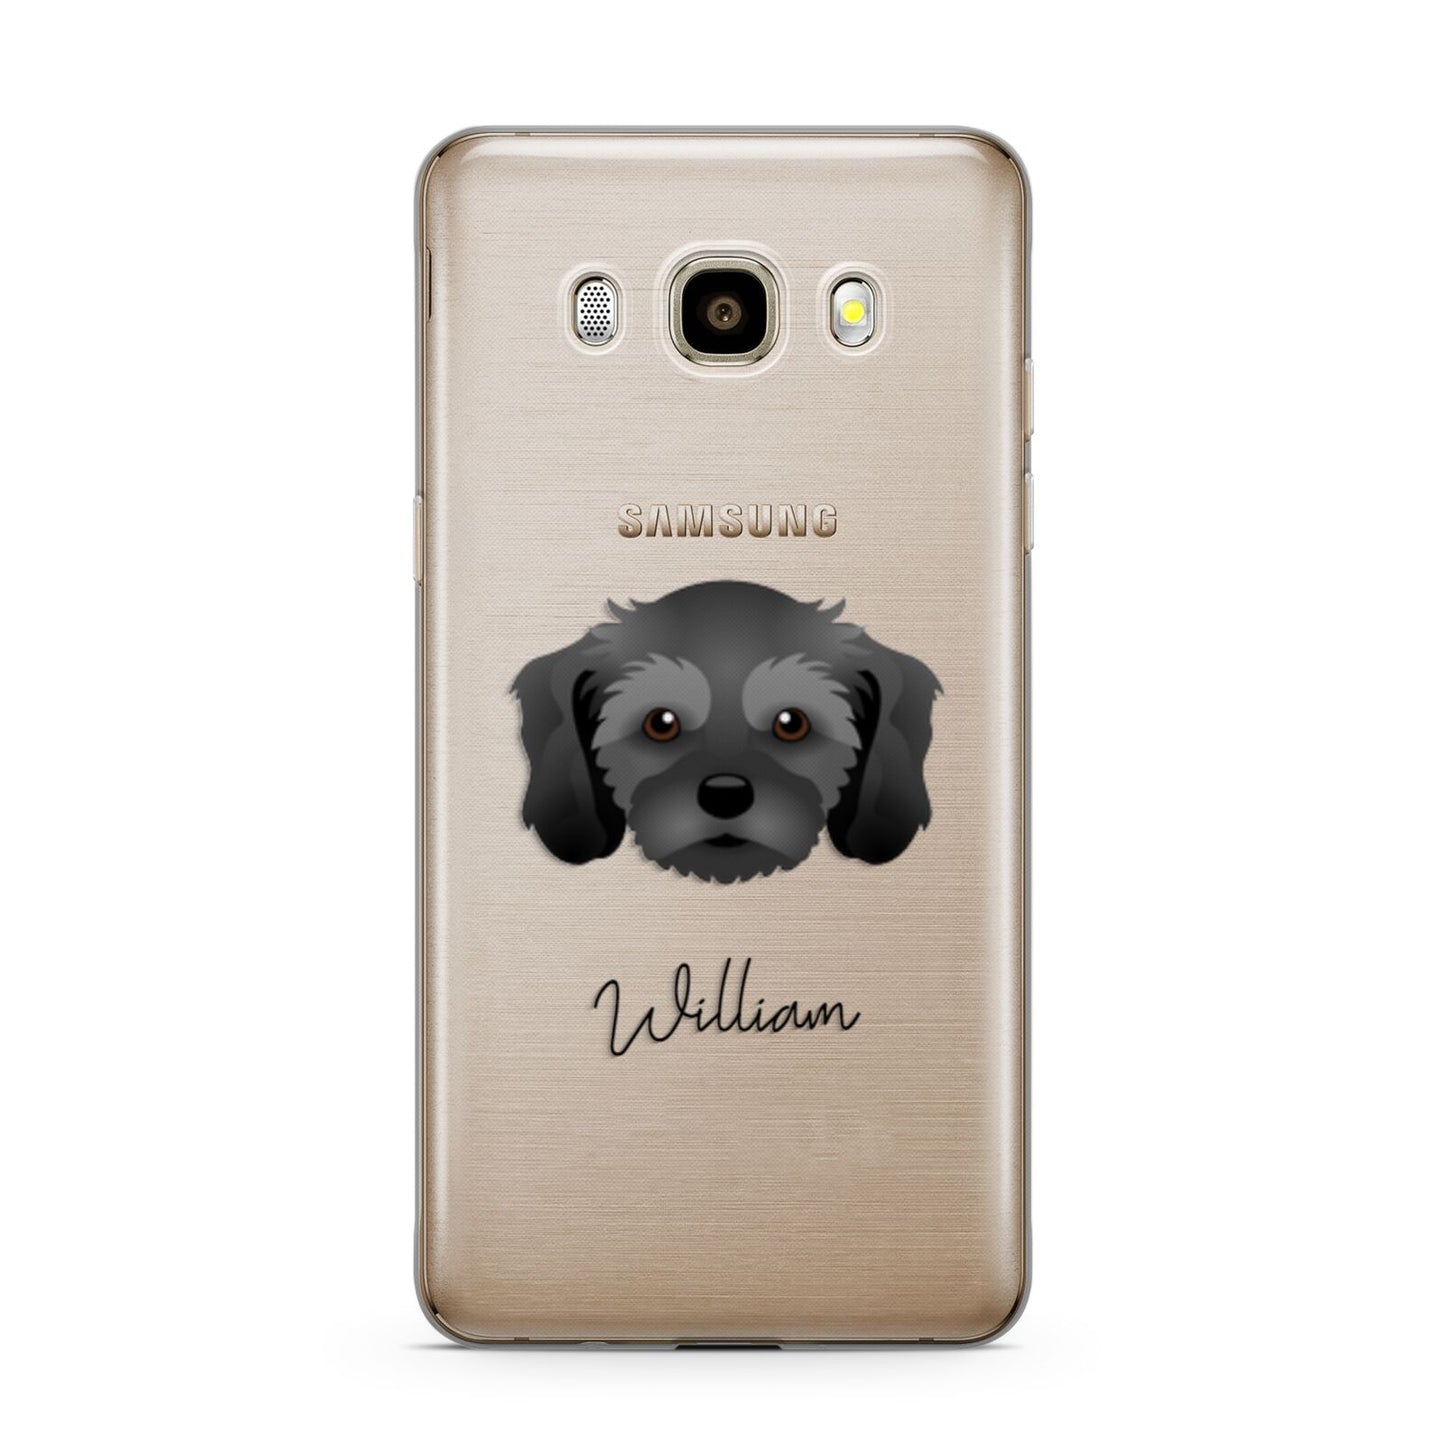 Cavachon Personalised Samsung Galaxy J7 2016 Case on gold phone